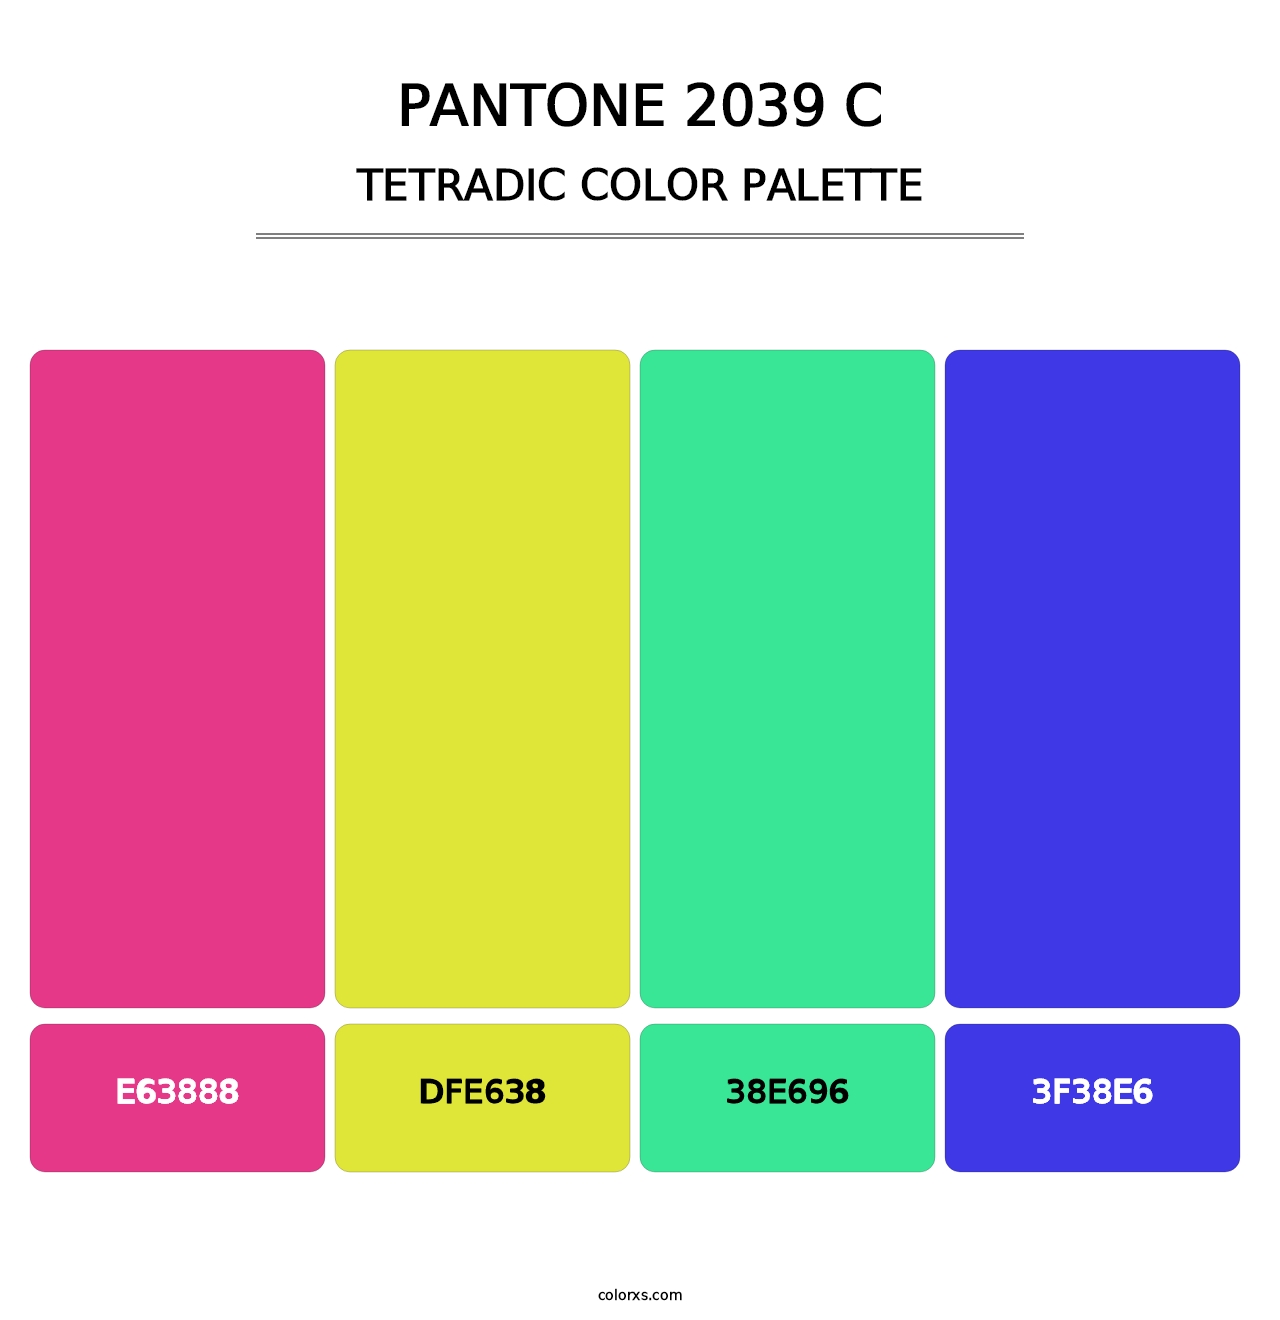 PANTONE 2039 C - Tetradic Color Palette